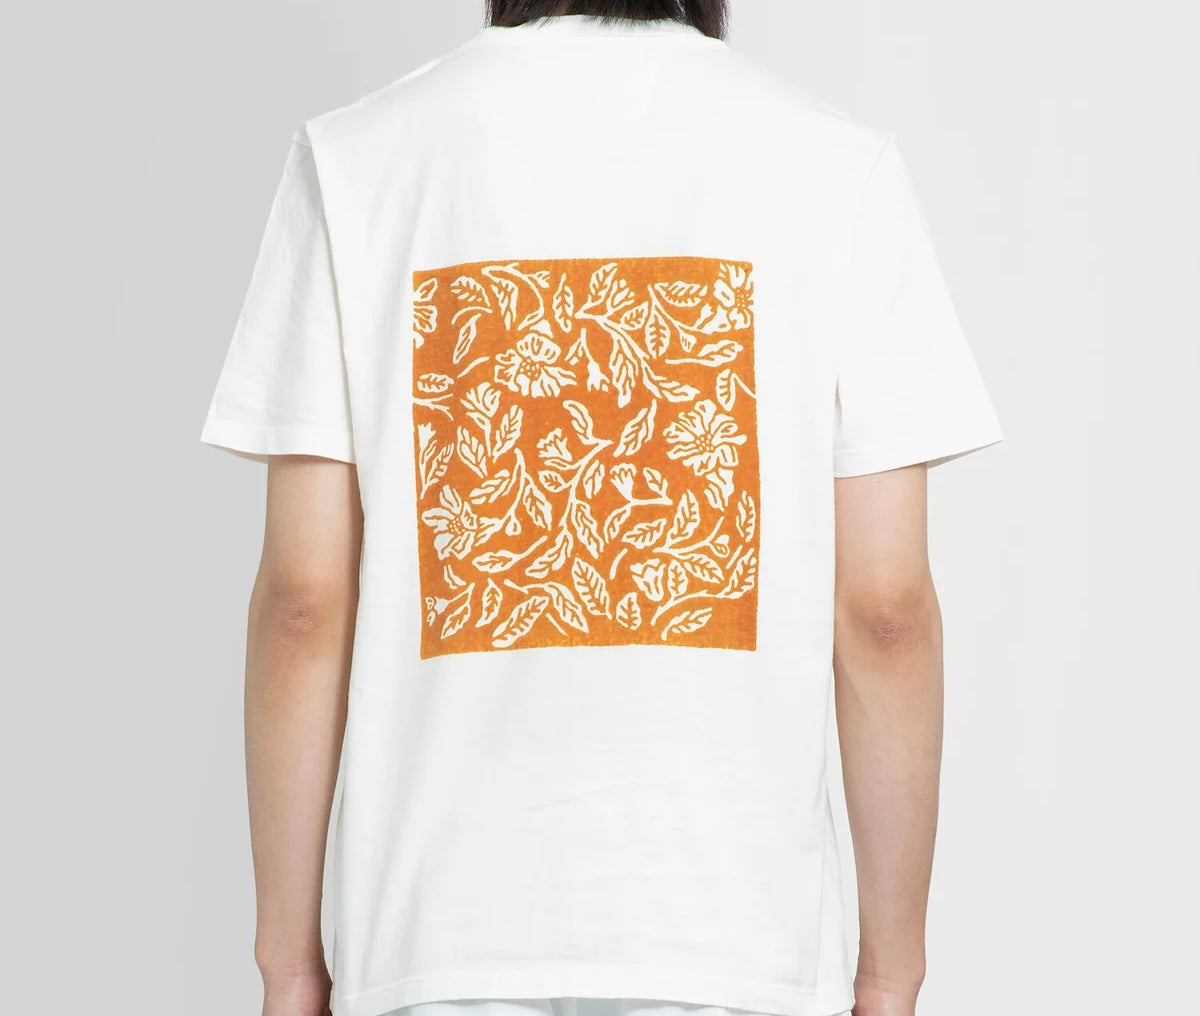 C.P Company Graphic Print T-Shirt